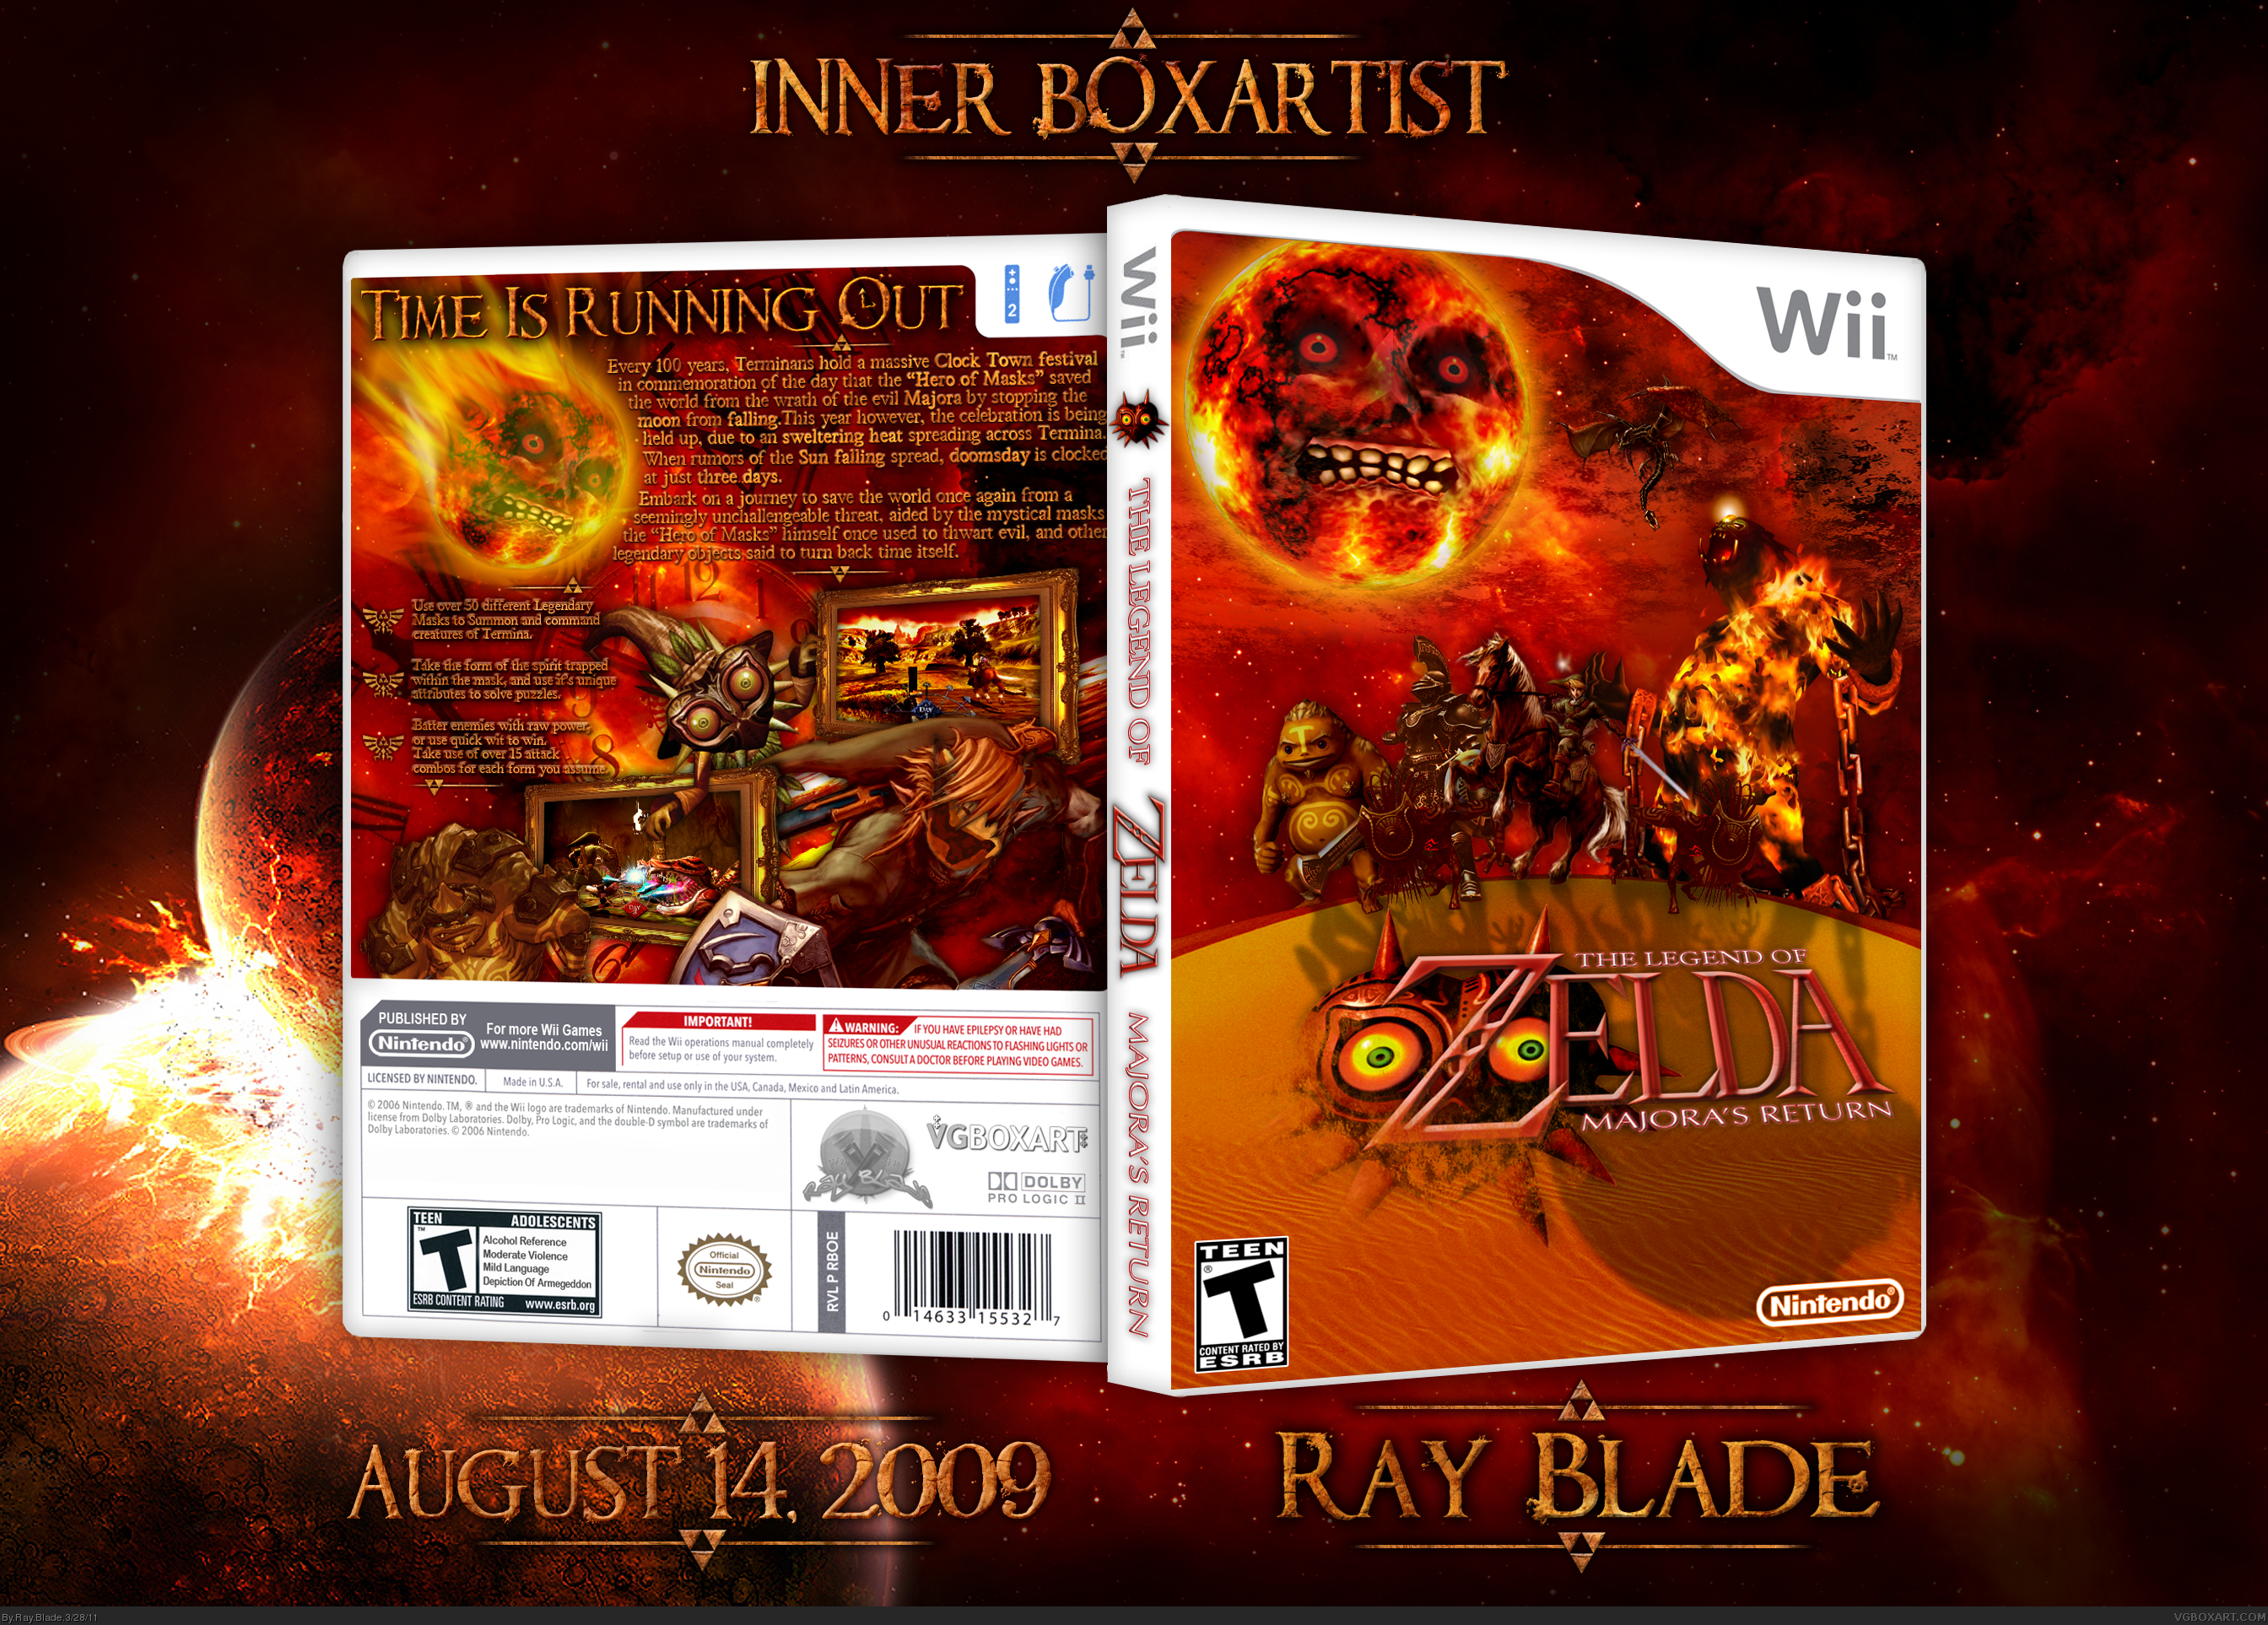 The Legend of Zelda: Majora's Return box cover